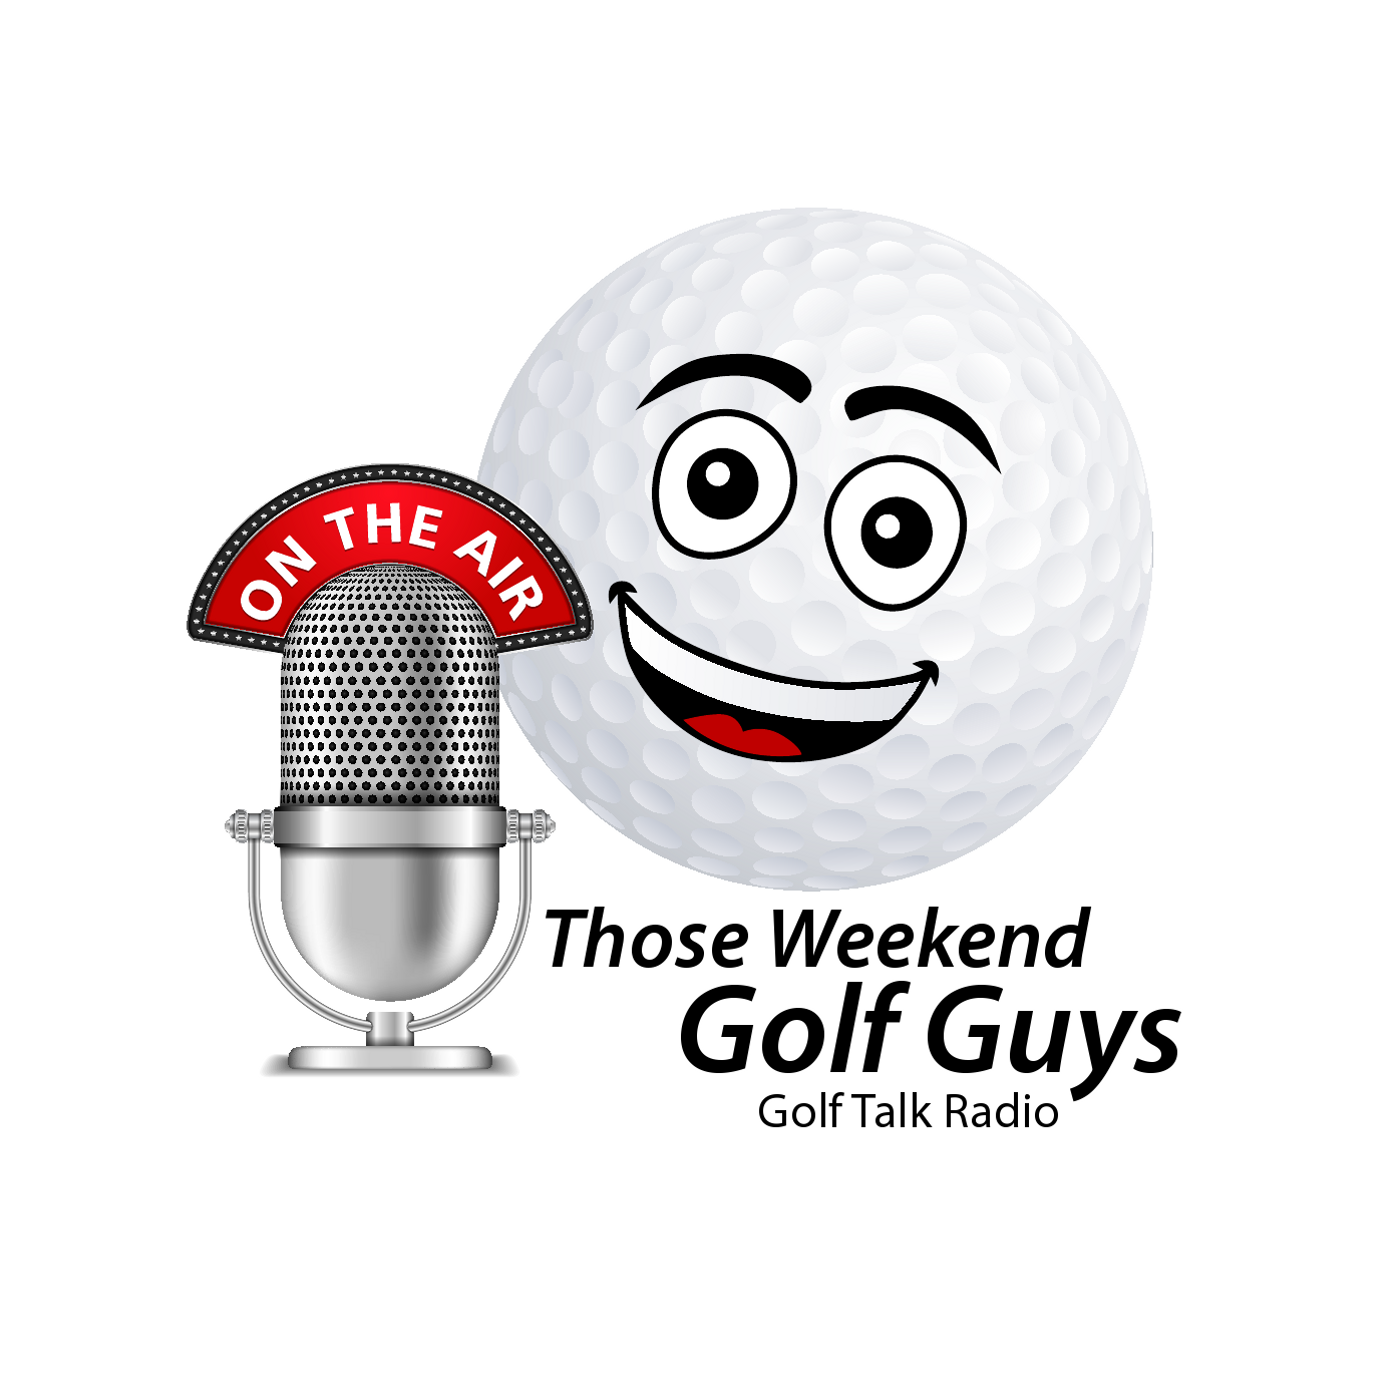 Those Weekend Golf Guys image